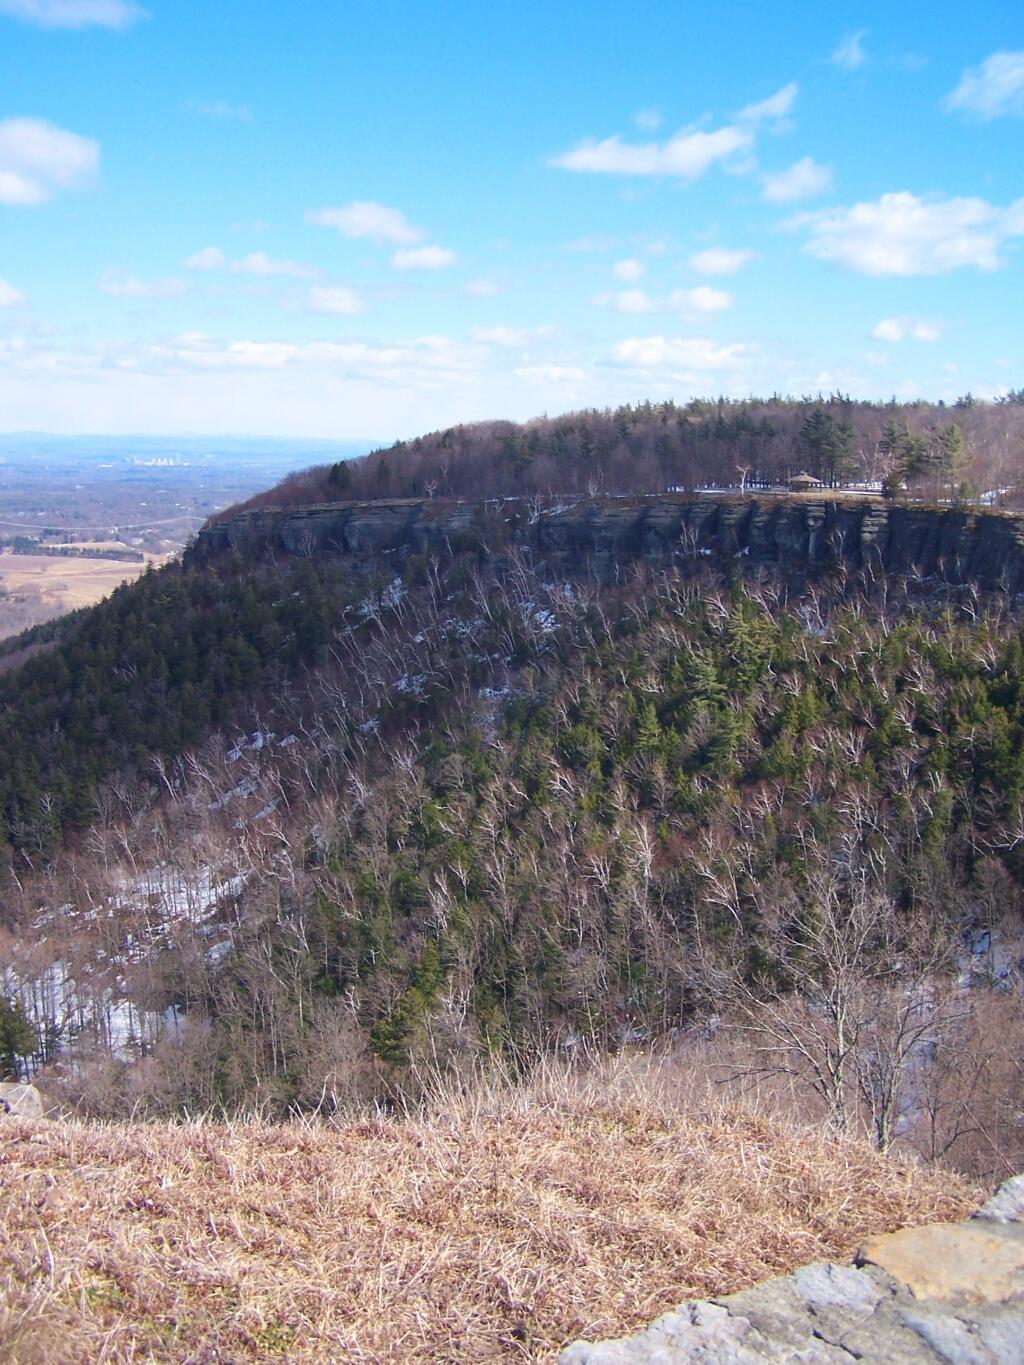 Escarpment